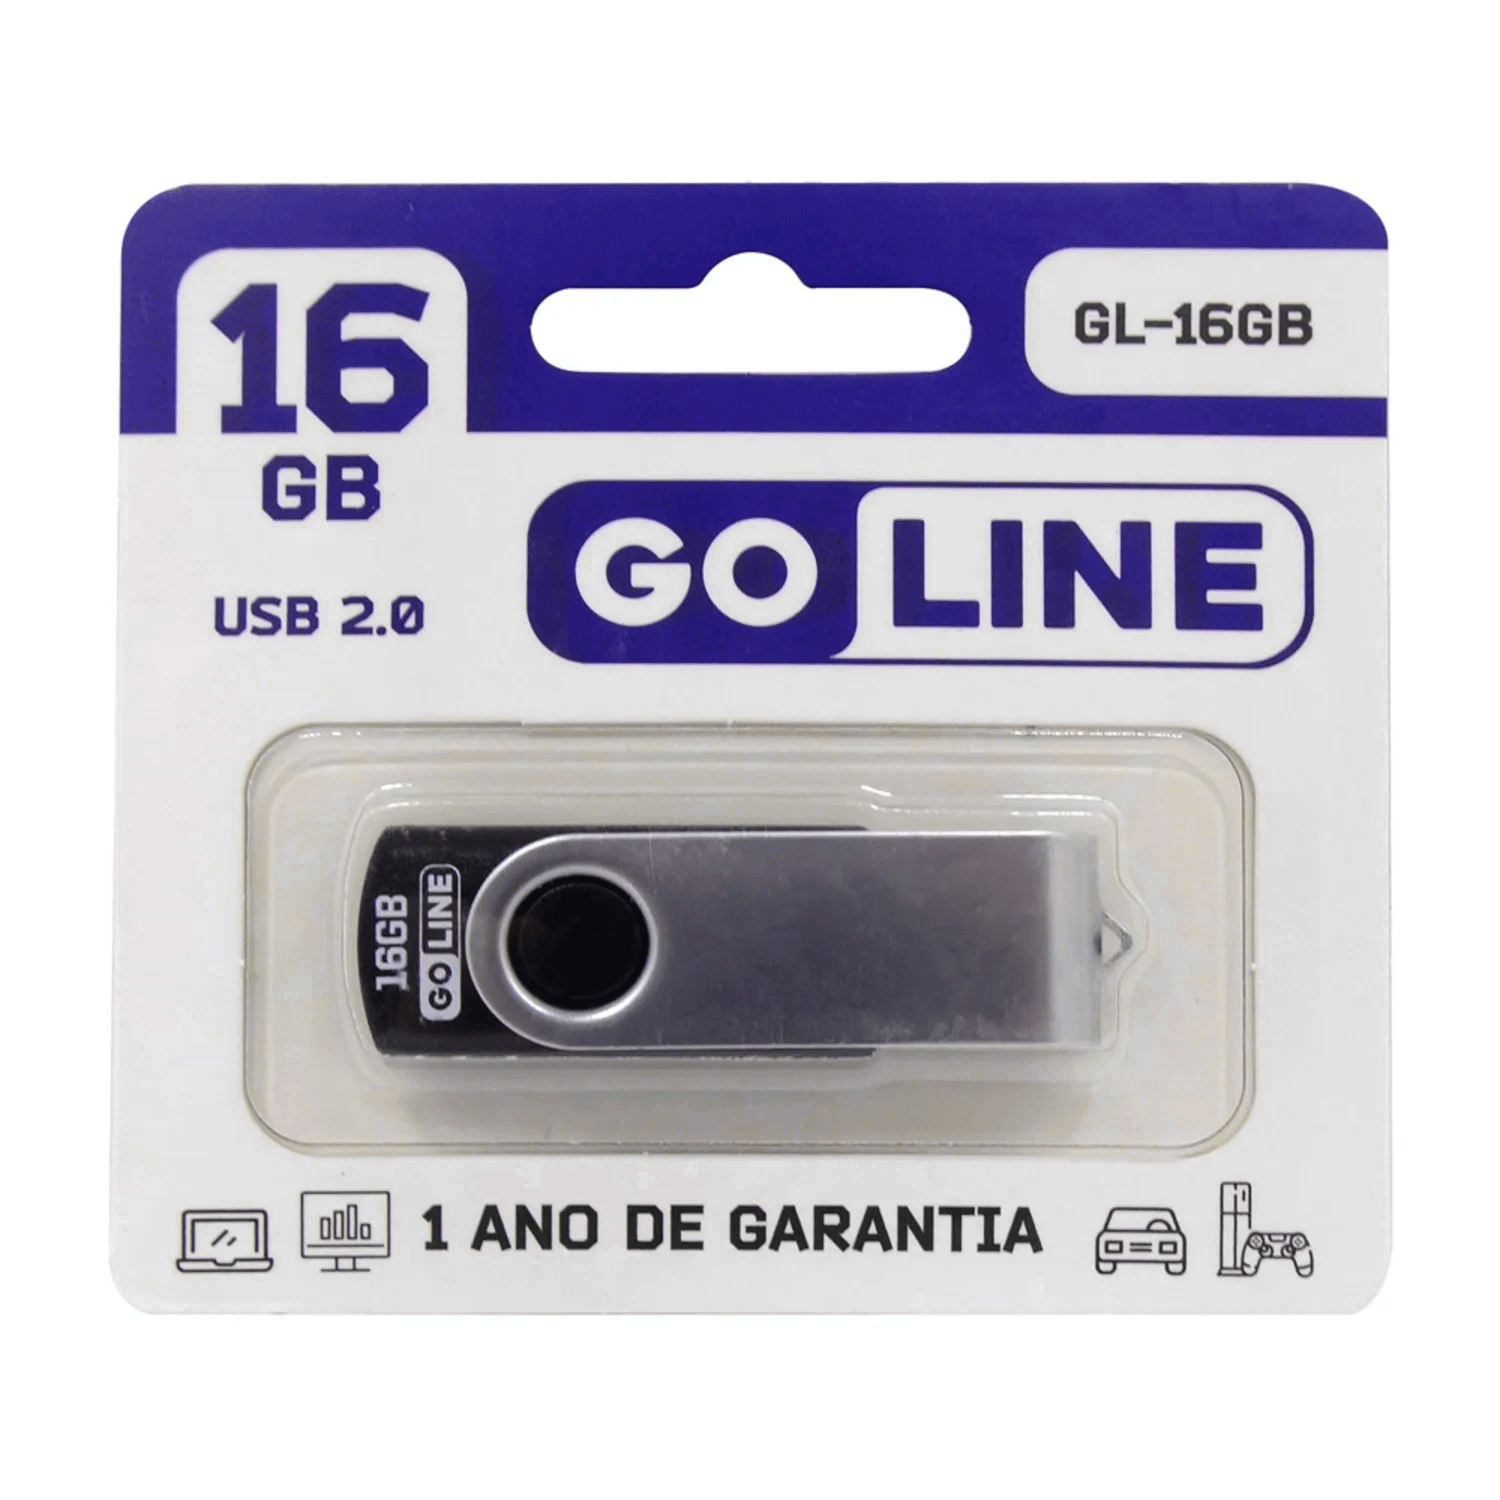 Pendrive GoLine GL-16GB 16GB USB 2.0 - Preto